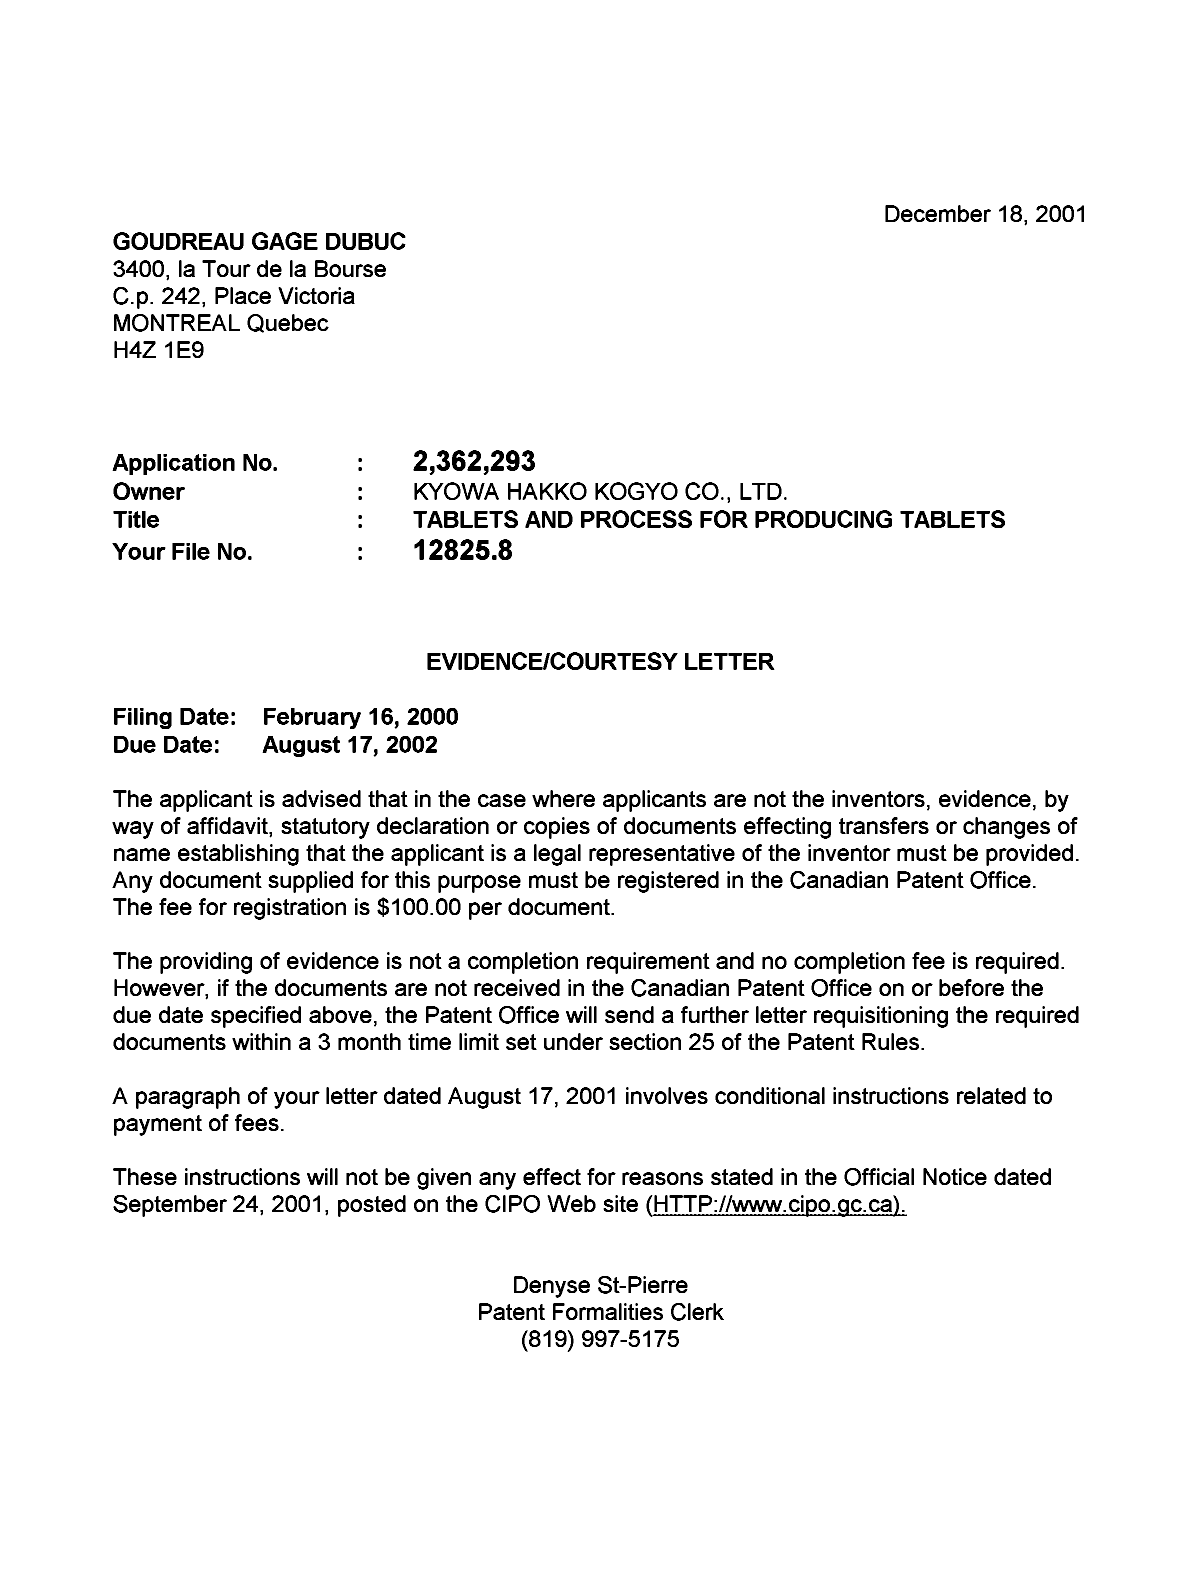 Canadian Patent Document 2362293. Correspondence 20001212. Image 1 of 1